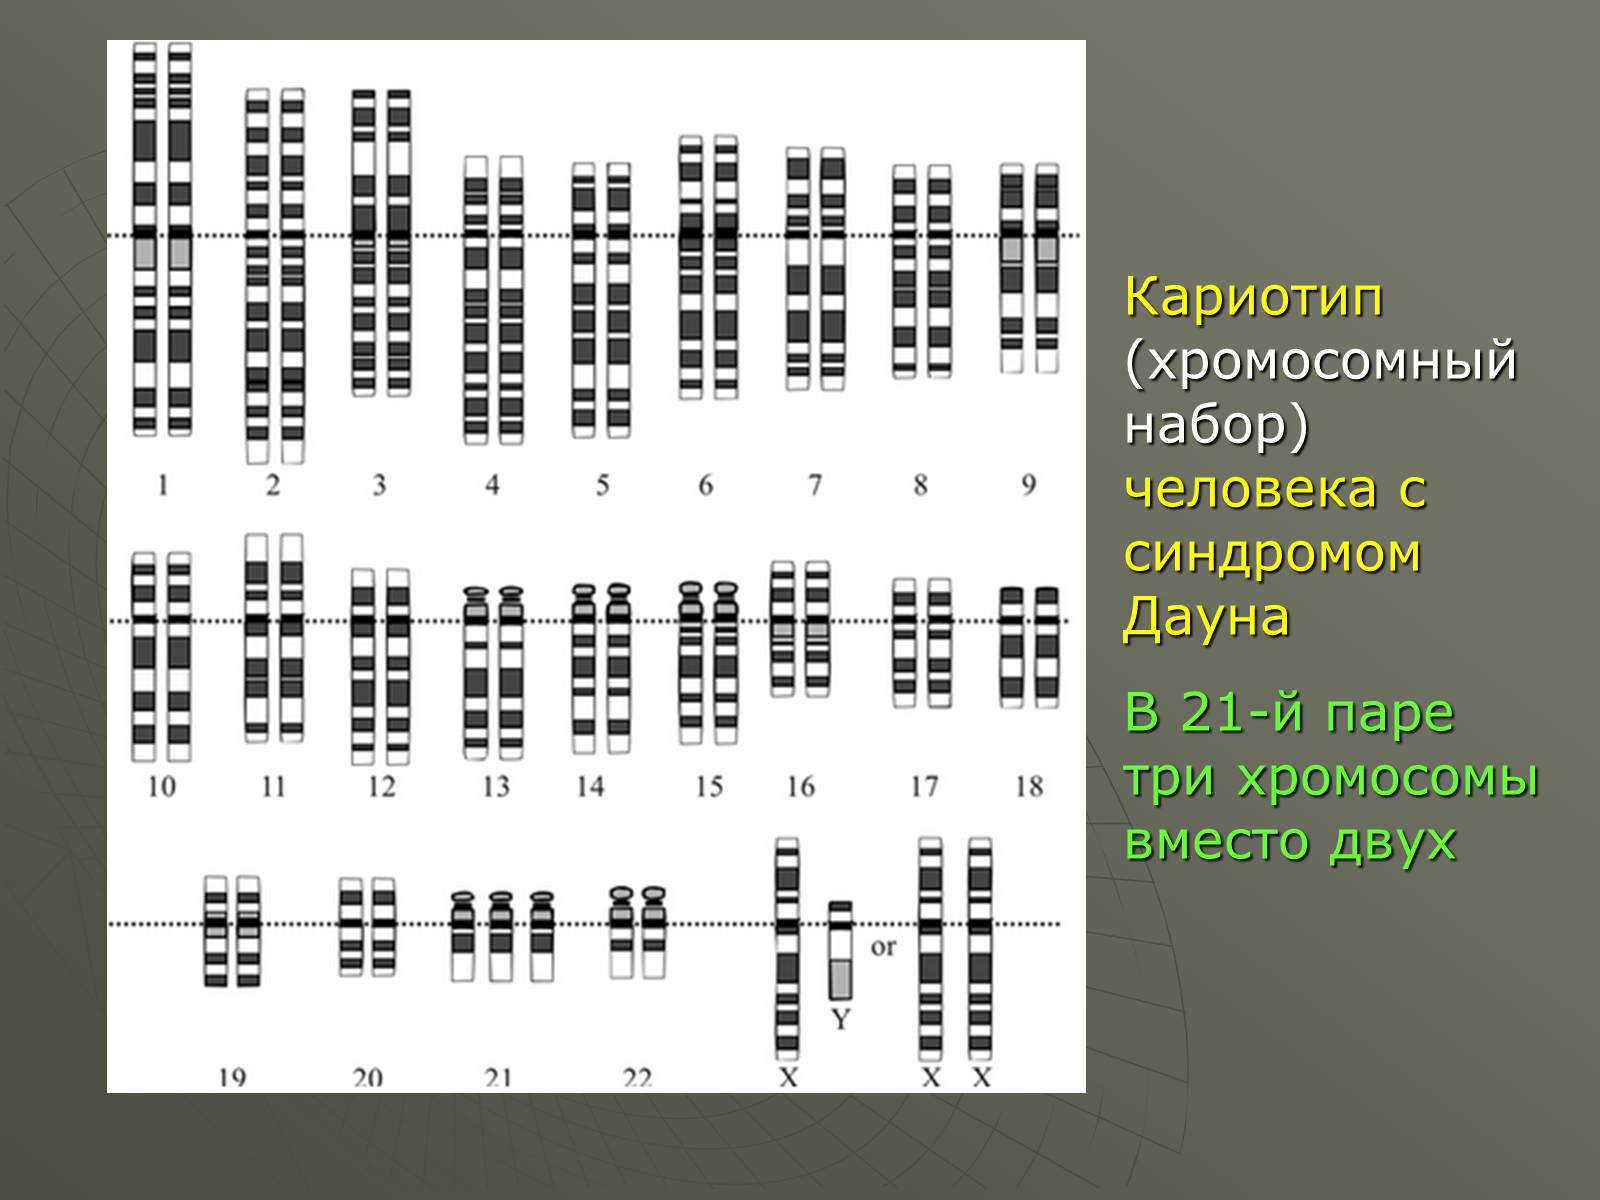 Синдром дауна лишняя хромосома. Кариотип человека с синдромом Дауна. Хромосомный набор кариотип человека. Набор хромосом при синдроме Дауна. Кариотип человека при синдроме Дауна.